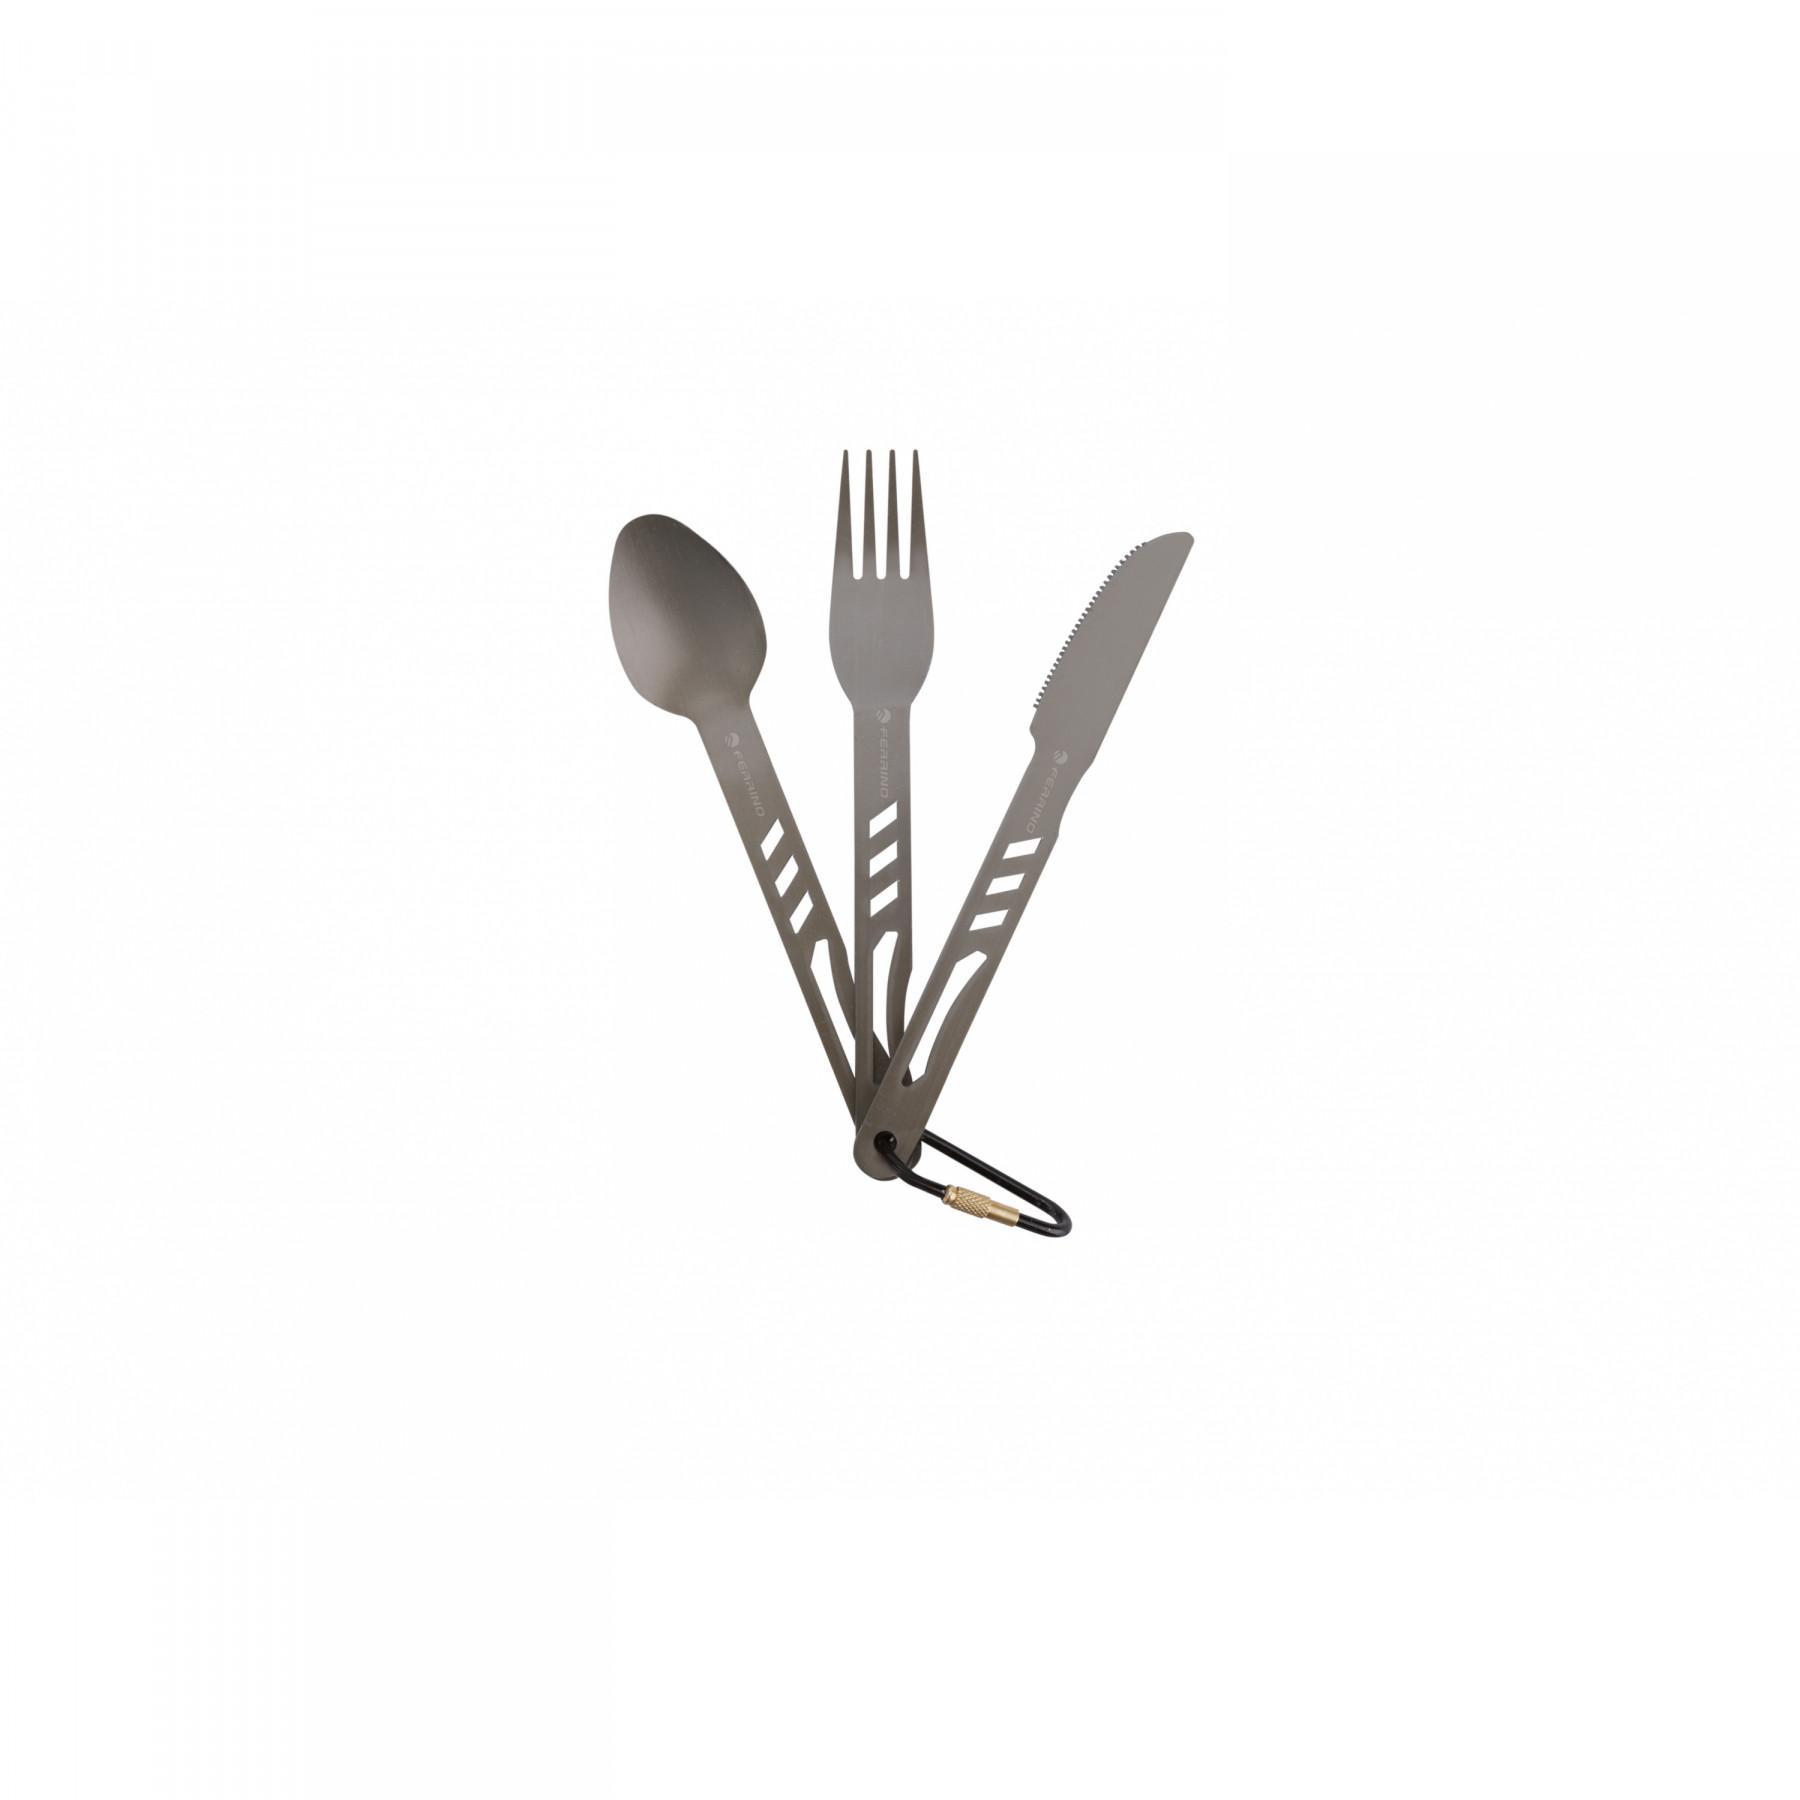 Aluminium cutlery set Ferrino